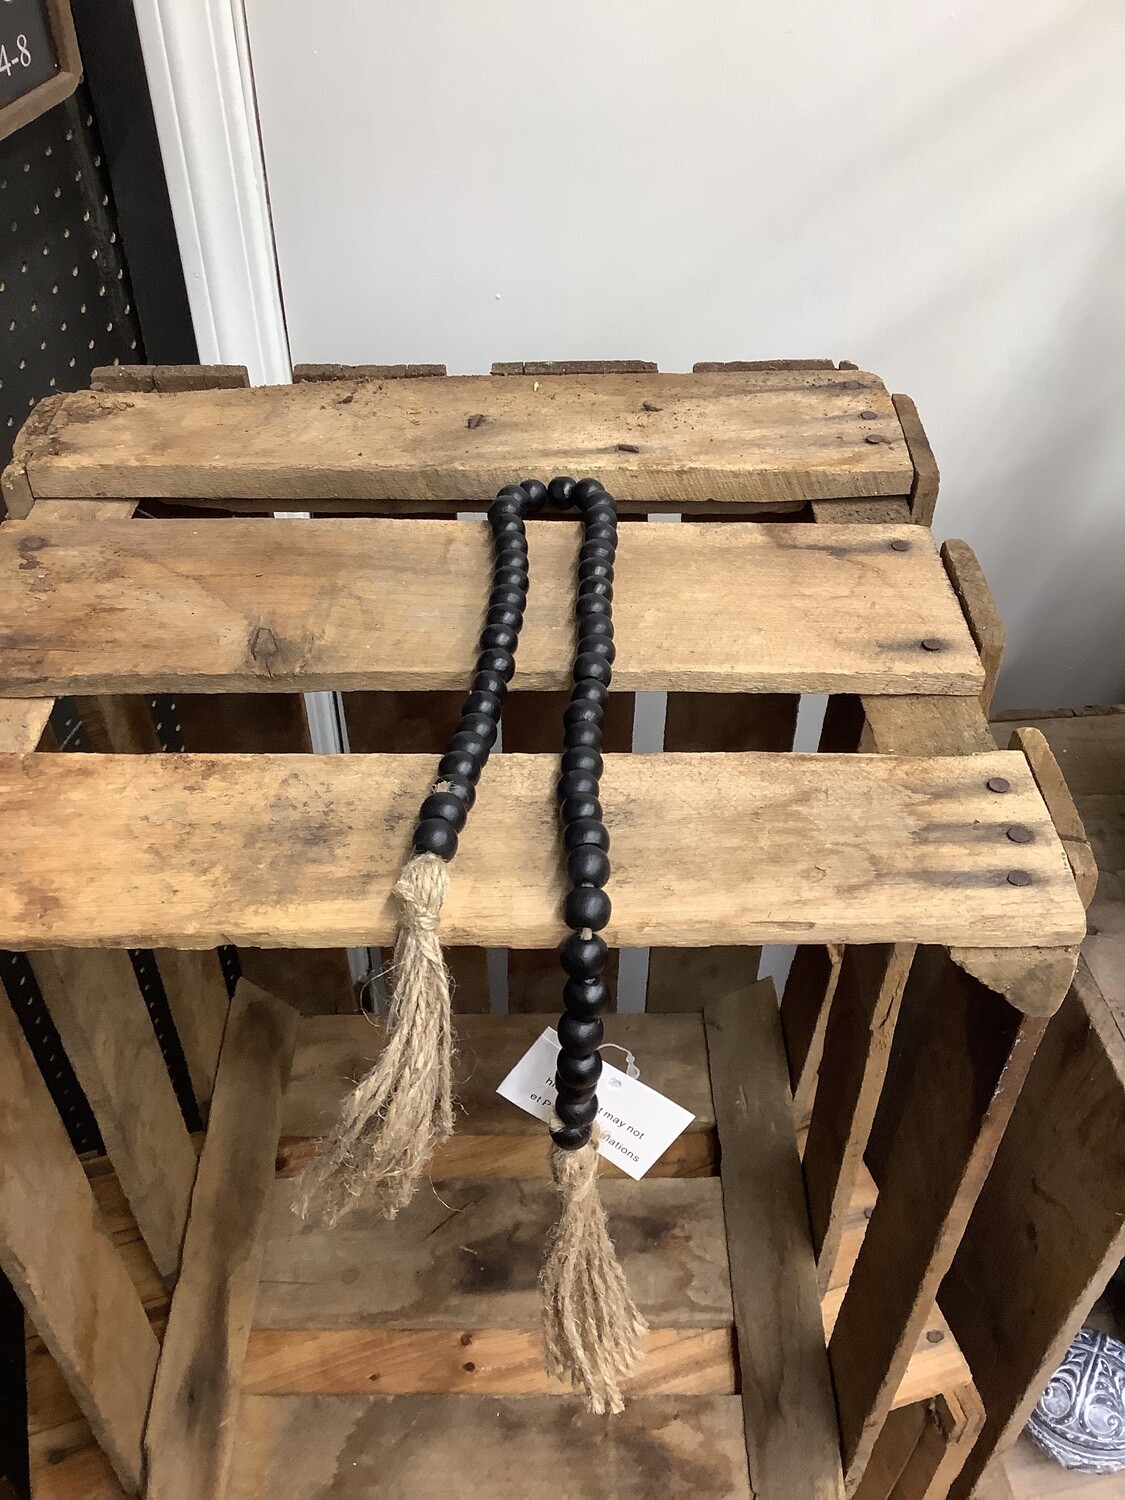 28" Black beads